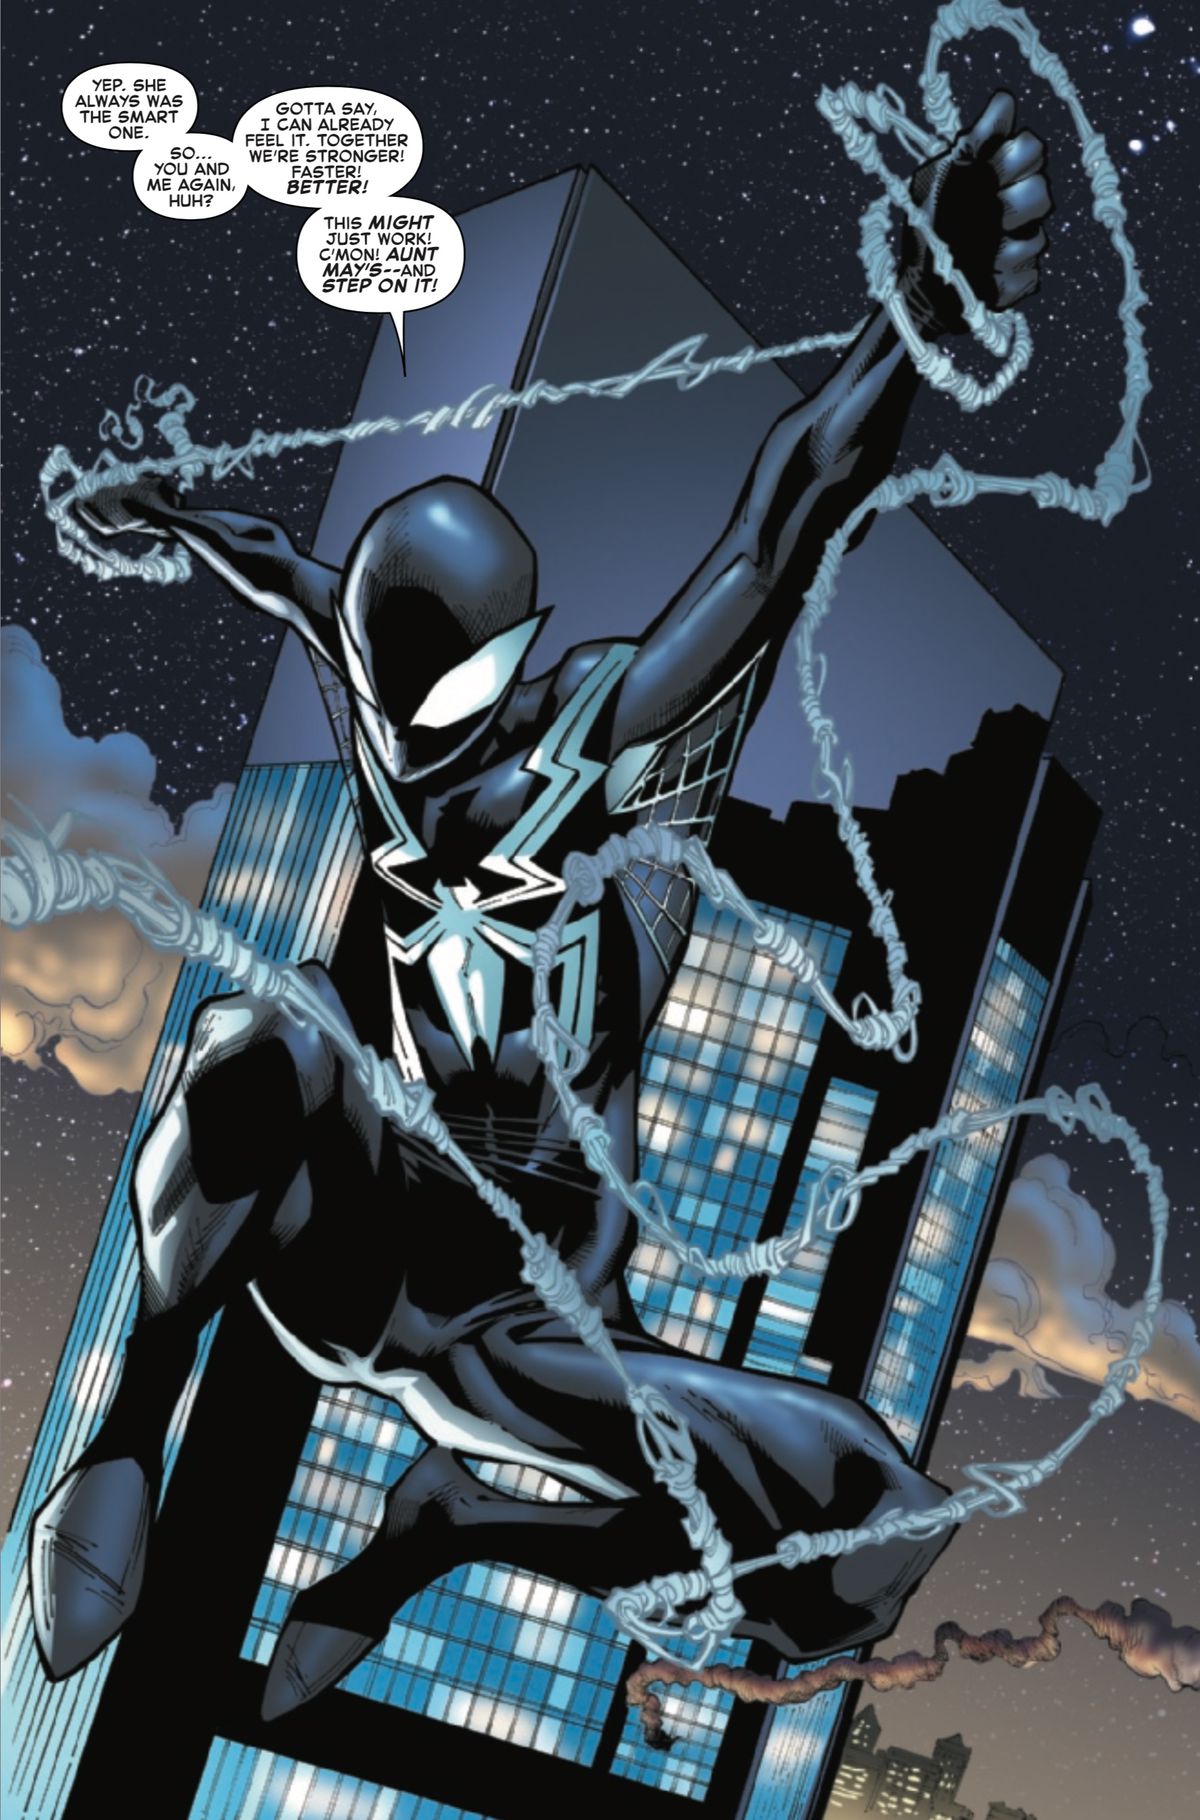 Peter Parker dons the Venom symbiote in Amazing Spider-Man #800, Marvel Comics (2018).